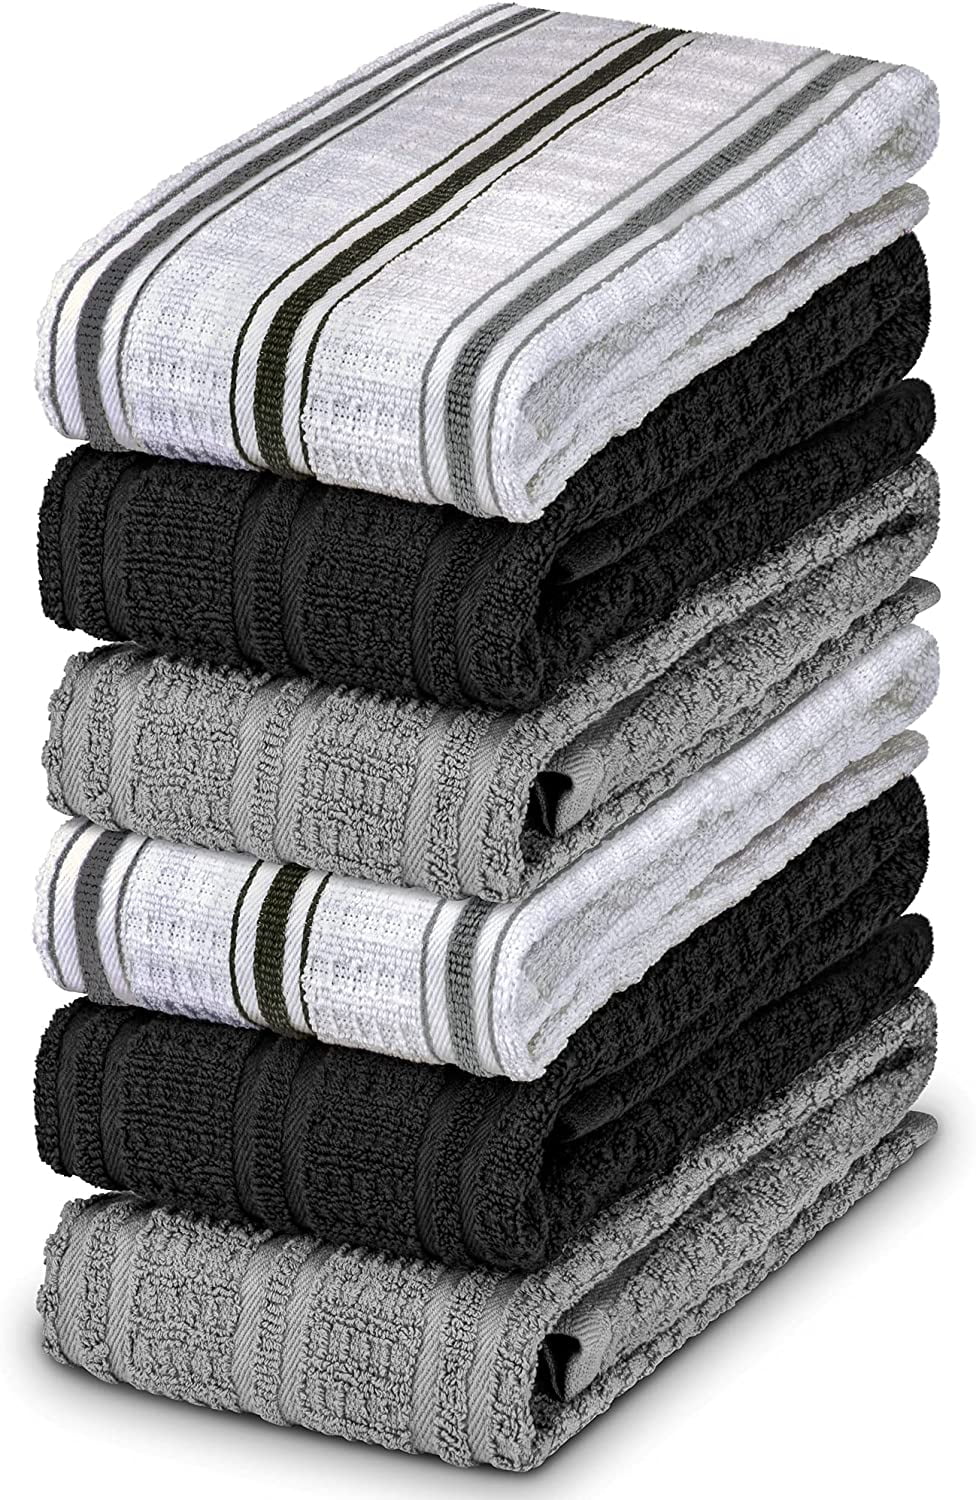 DecorRack 6 Large Kitchen Towels, 100% Cotton, 16 x 27 inches